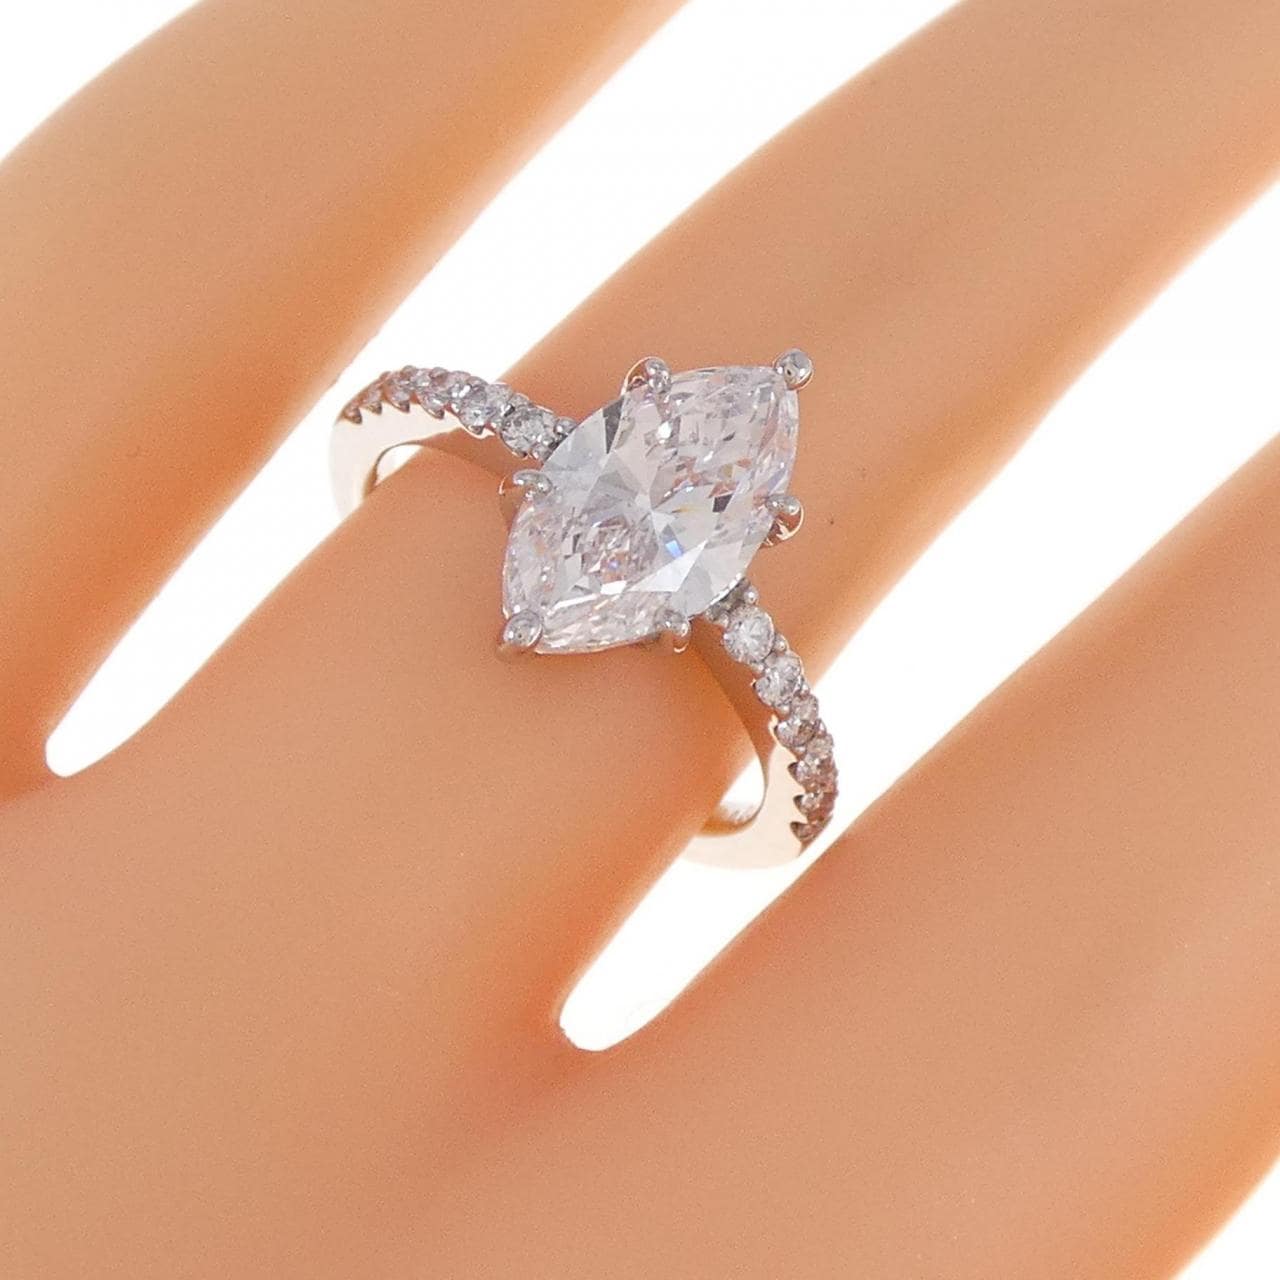 [Remake] PT Diamond Ring 2.005CT D VS2 Marquise Cut